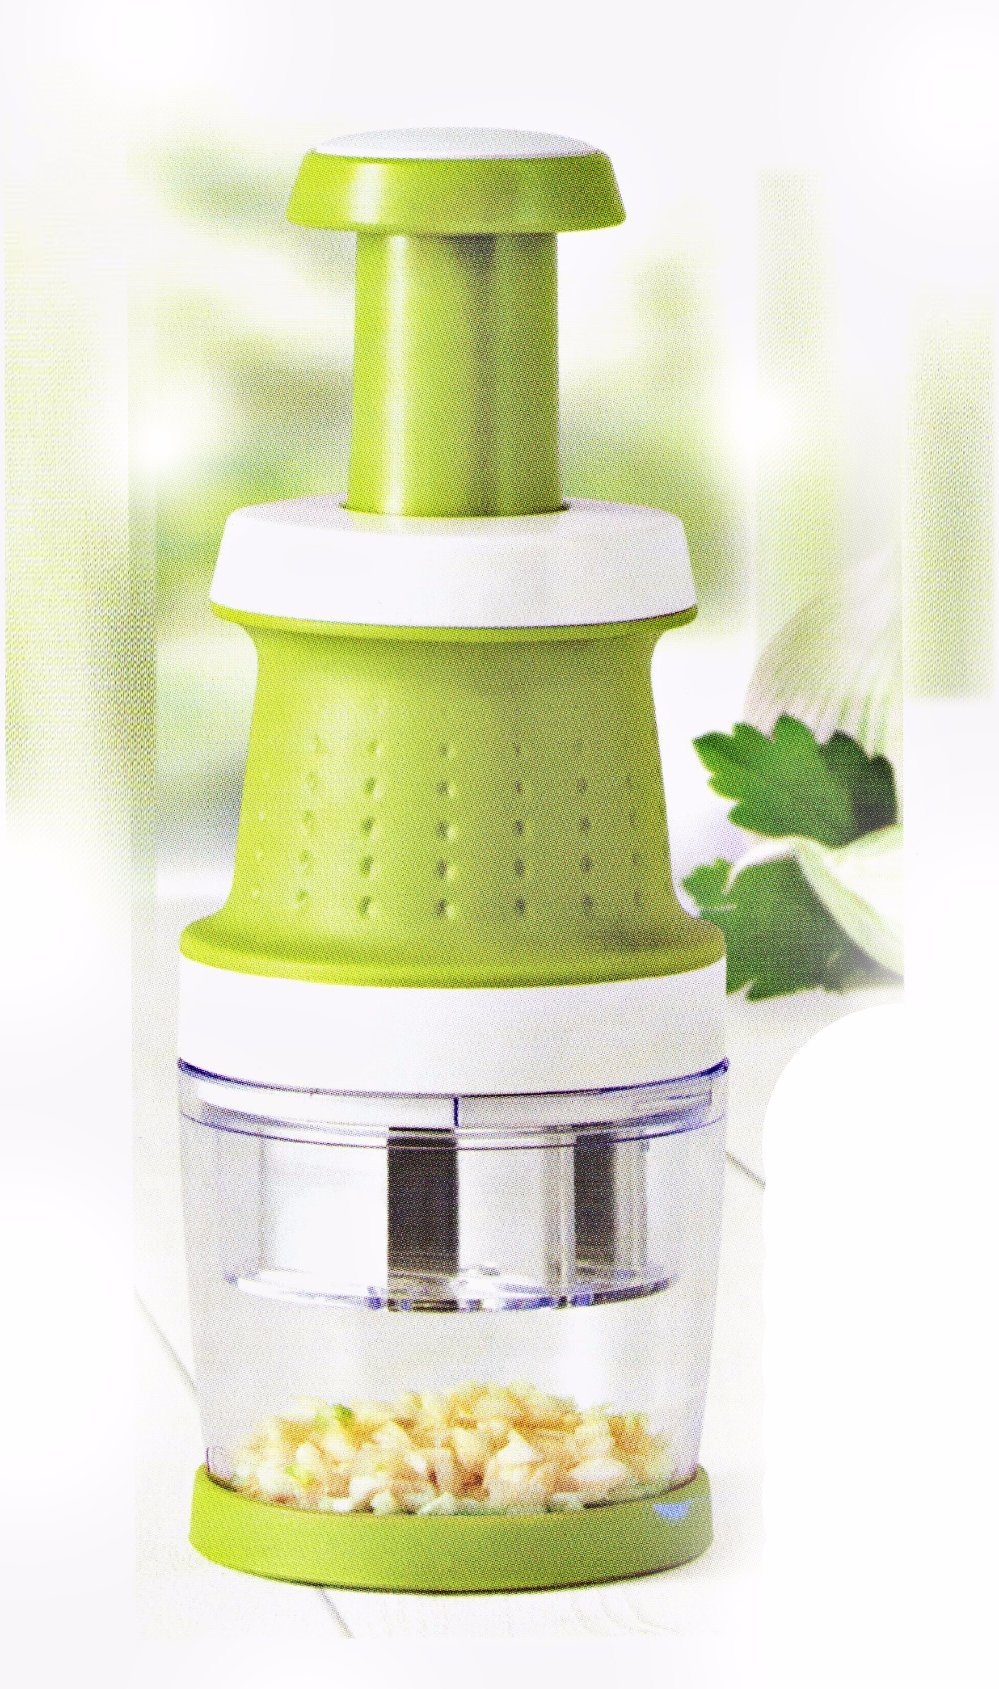 Home Appliance Plastic Food Processor Vegetable Chopper Cutting Machine Cg032